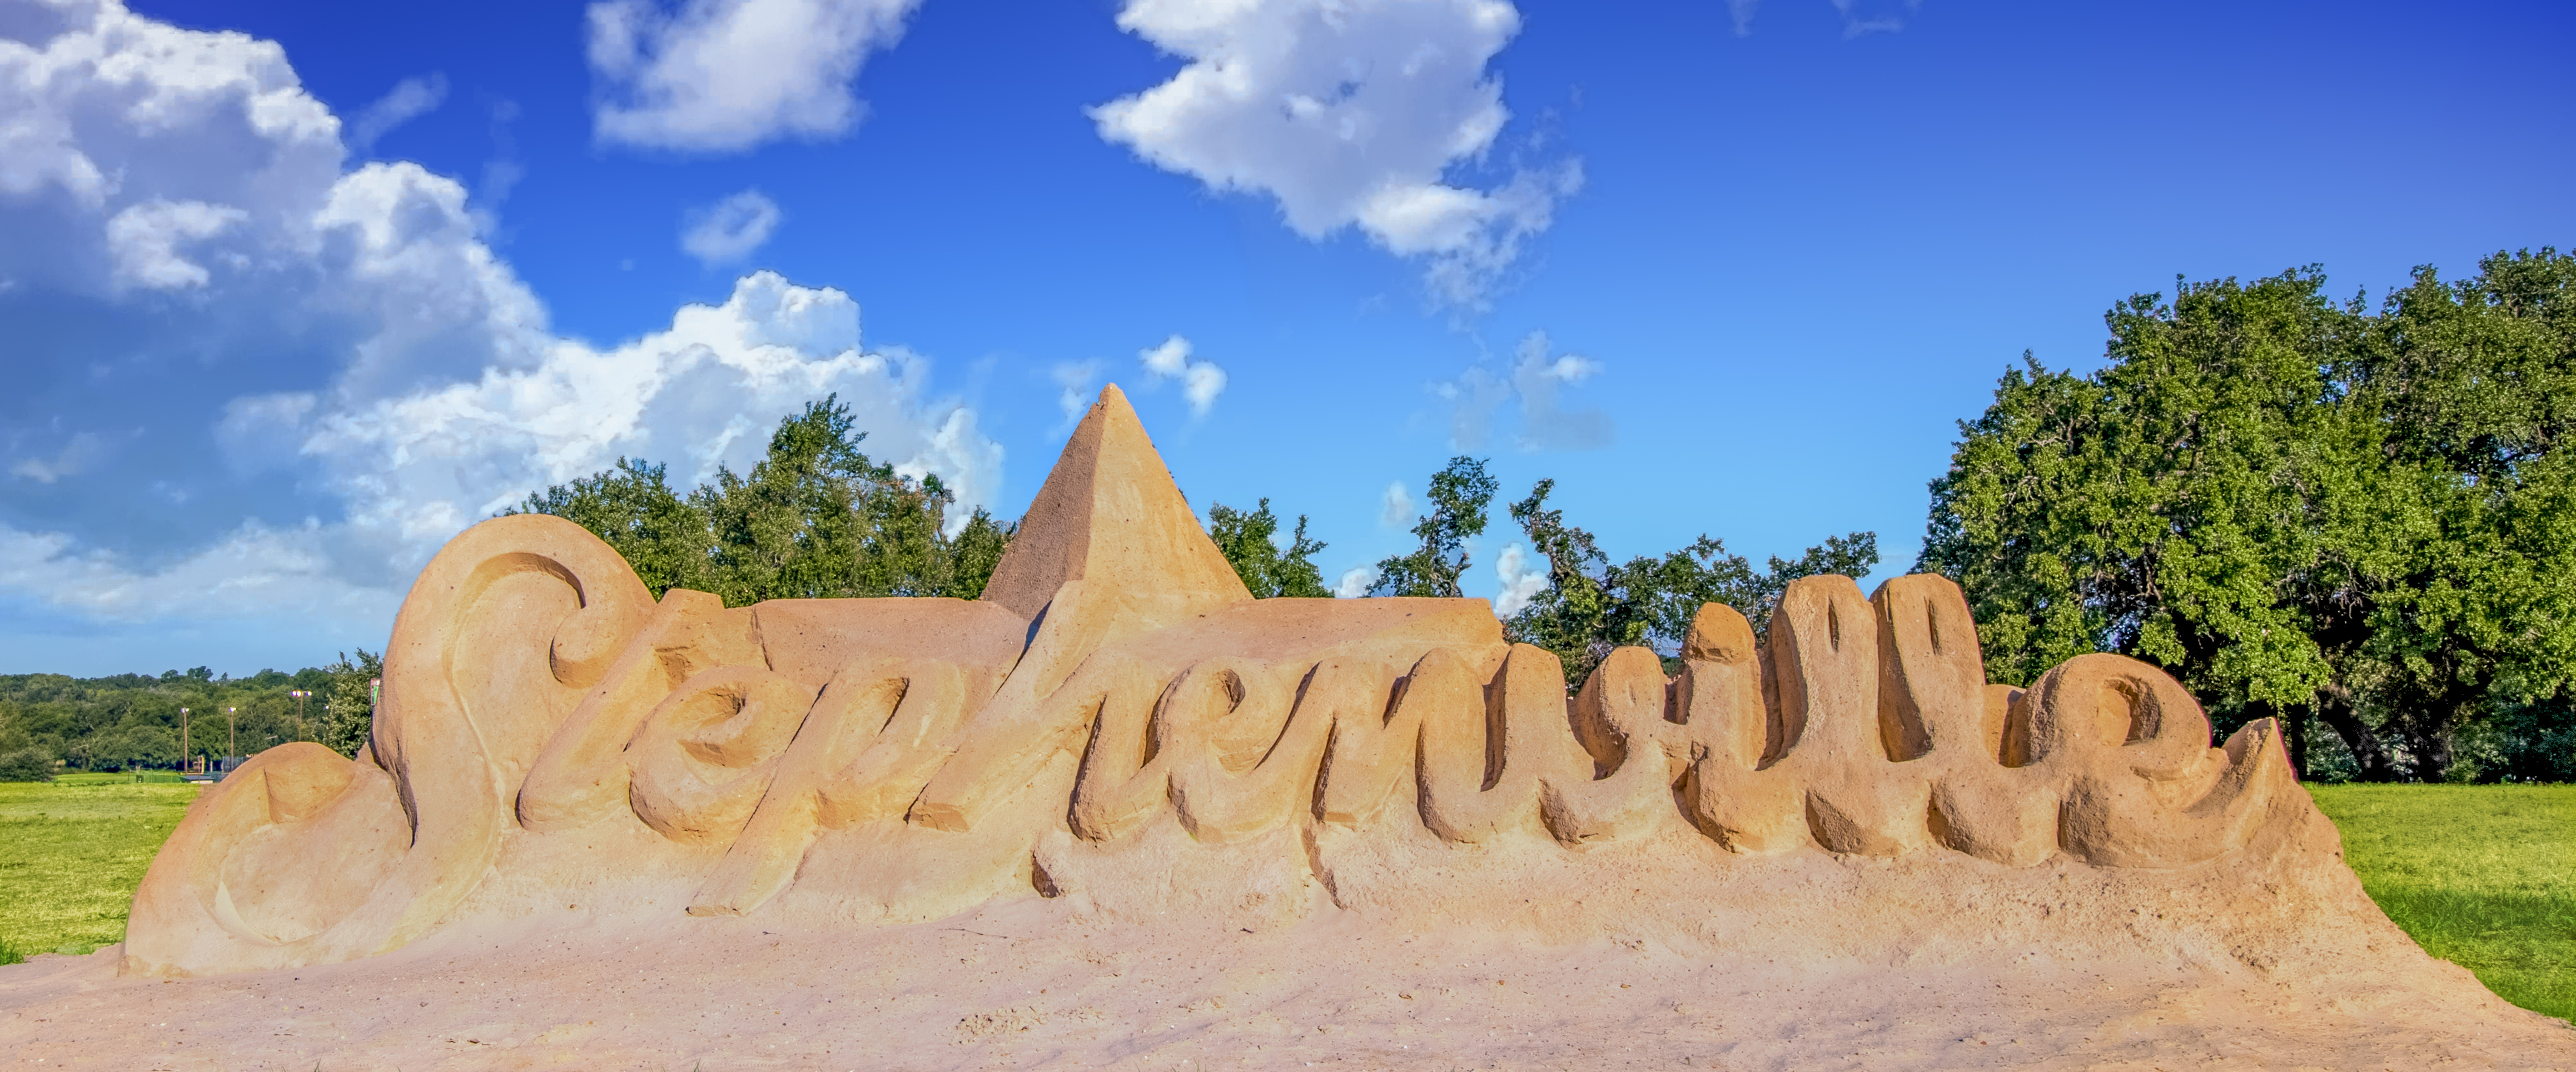 Stephenville Sand Sculpture